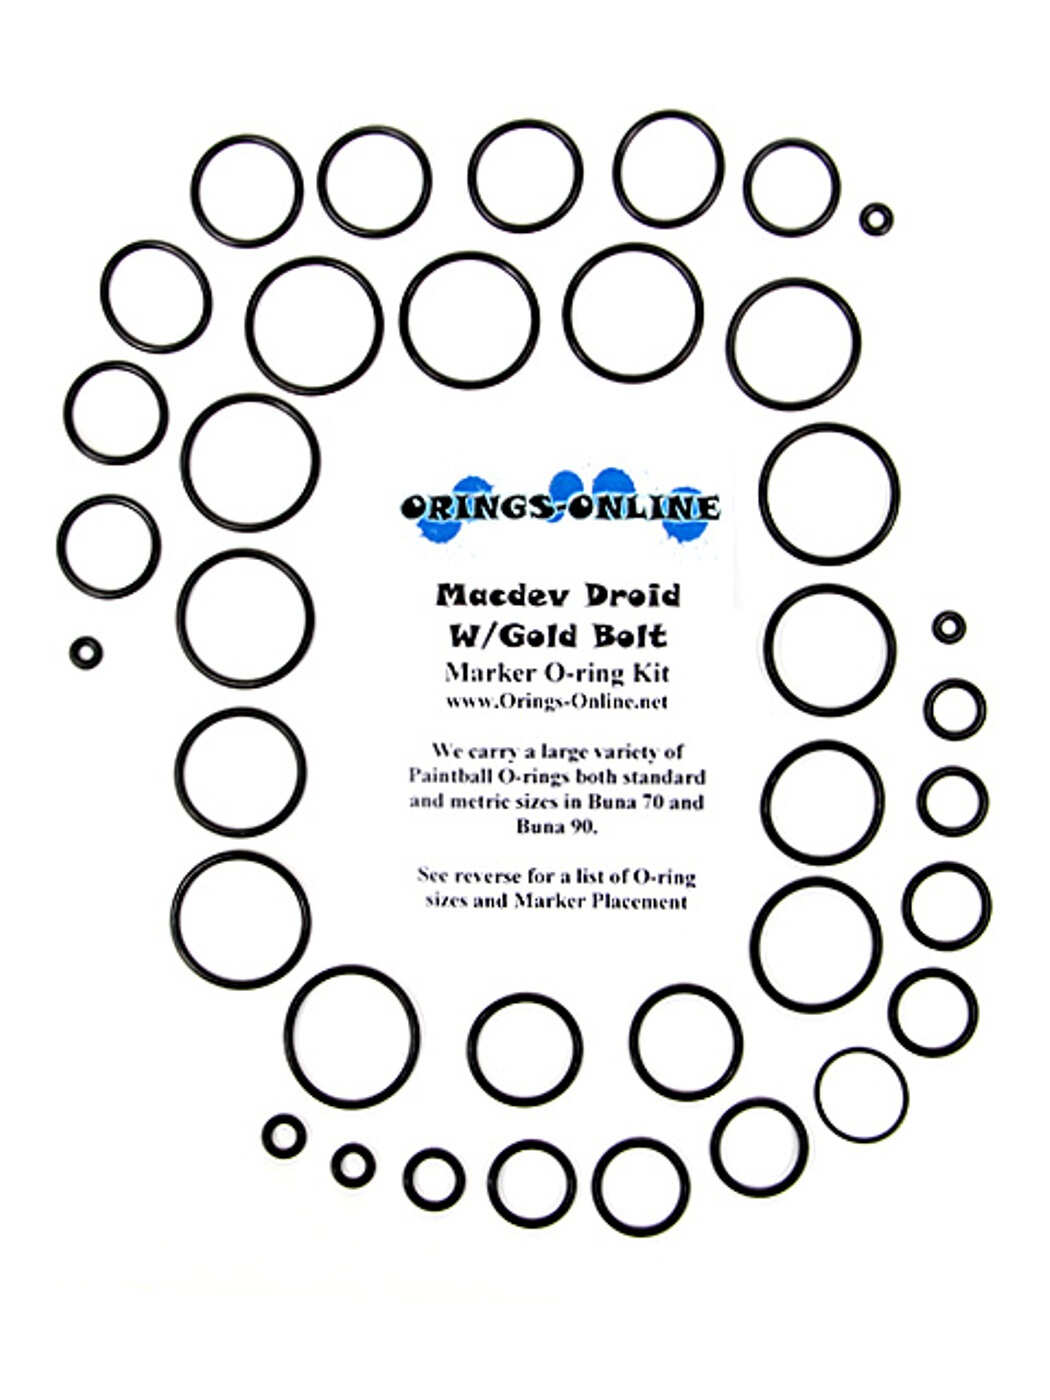 Macdev Cyborg Paintball Marker O-ring Oring Kit x 2 rebuilds kits 